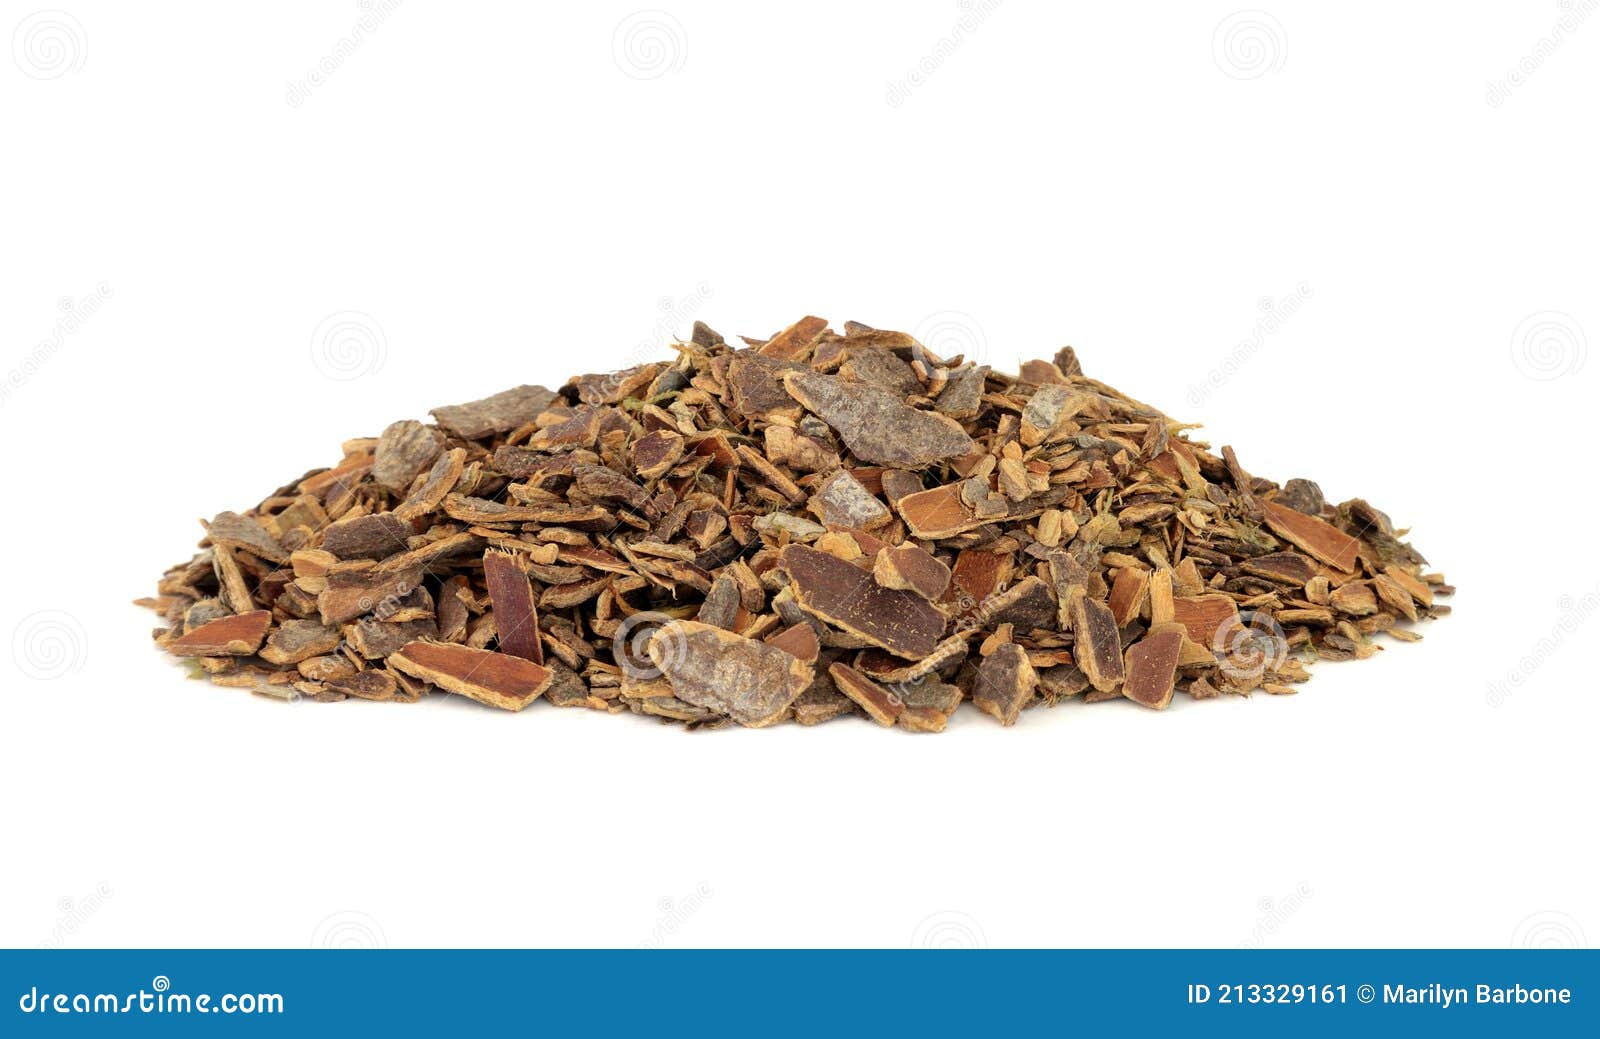 cascara herb bark herbal medicine